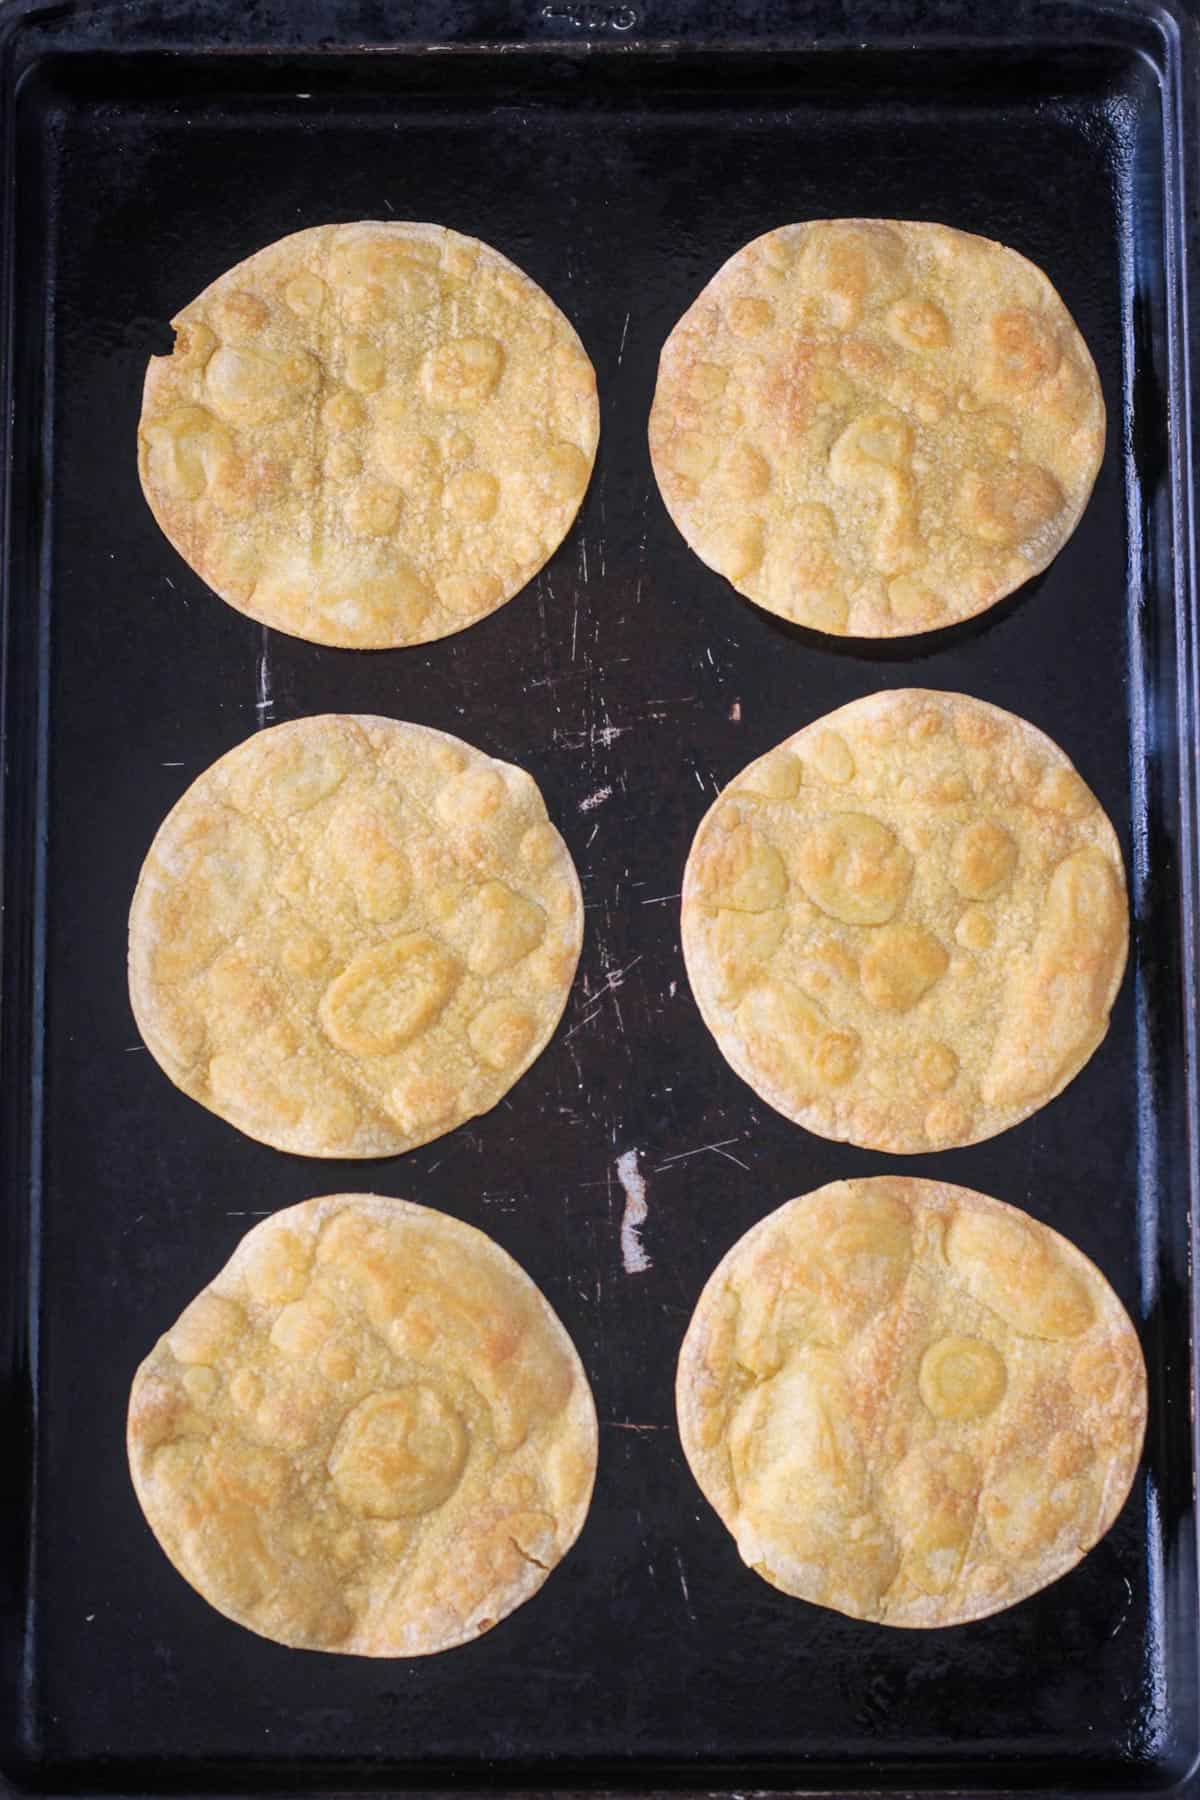 6 tortillas baked until crispy on a baking pan.